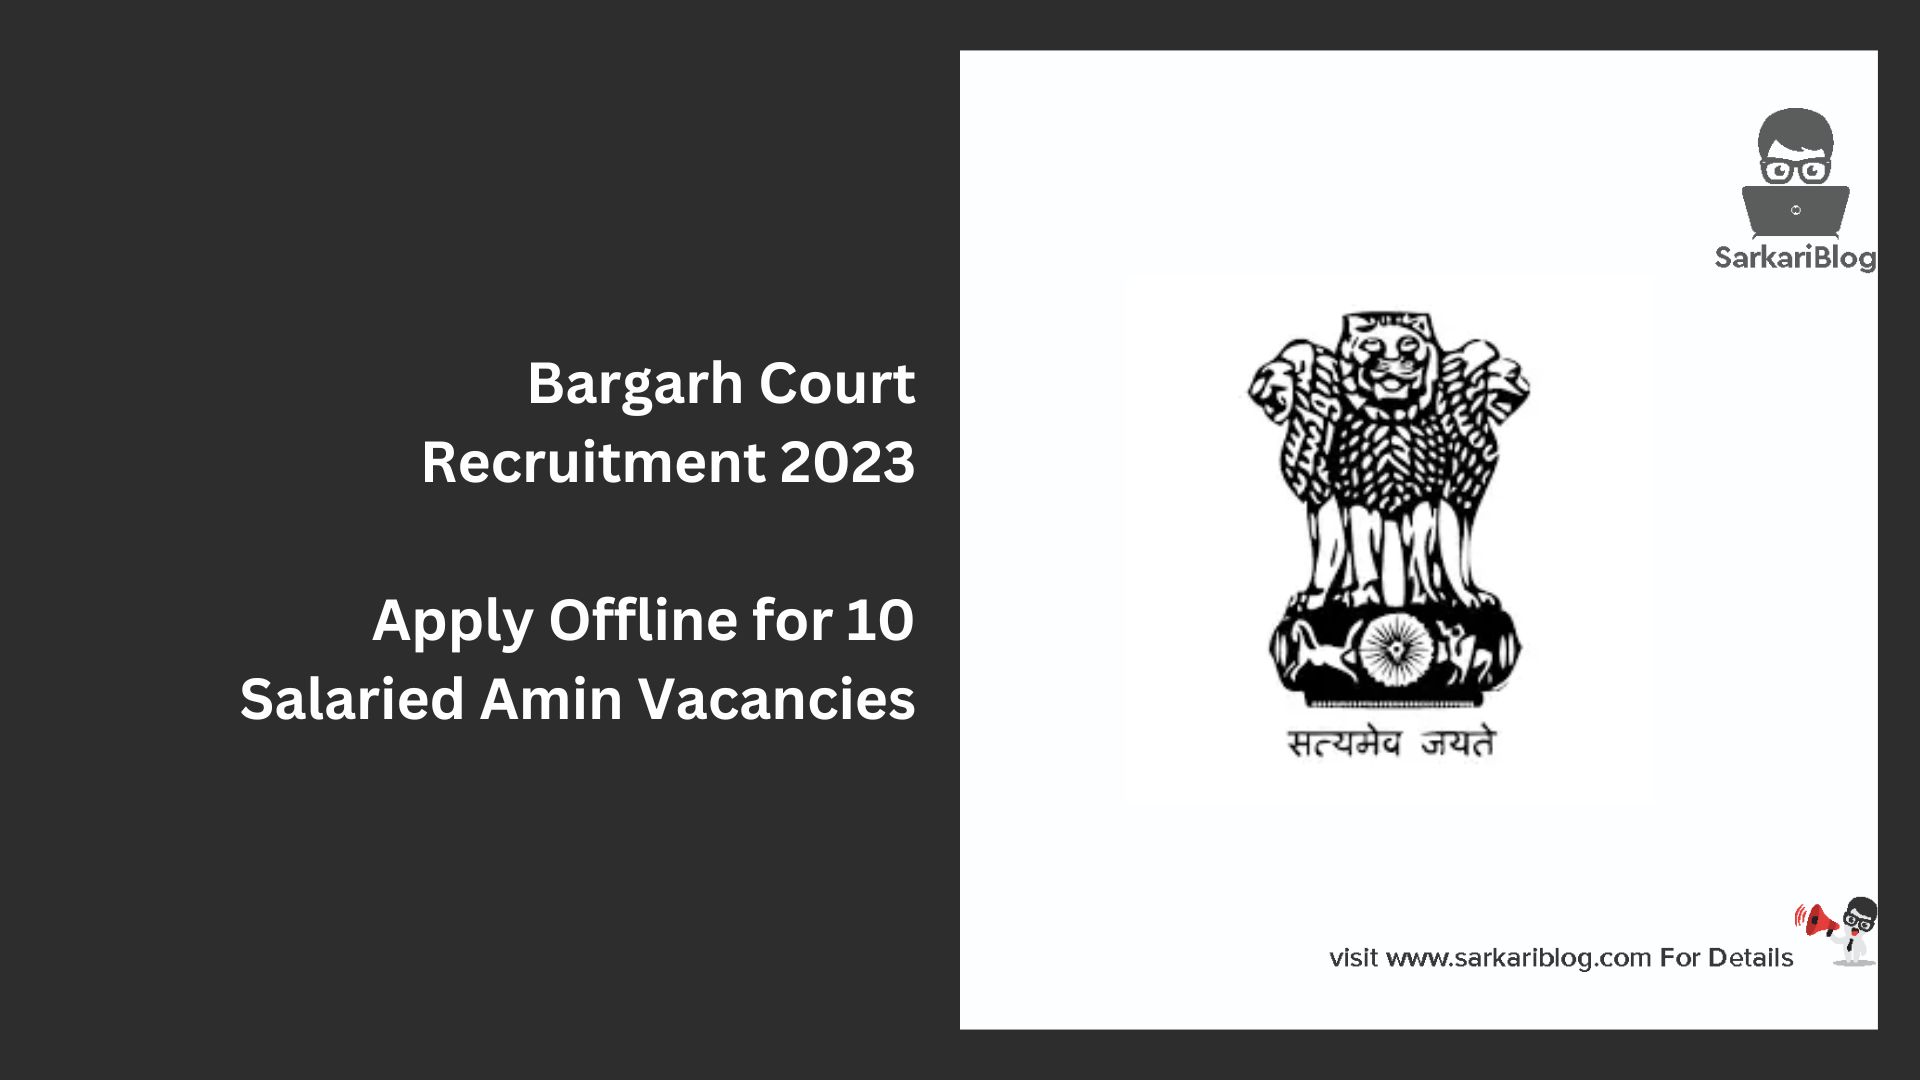 Bargarh Court Recruitment 2023